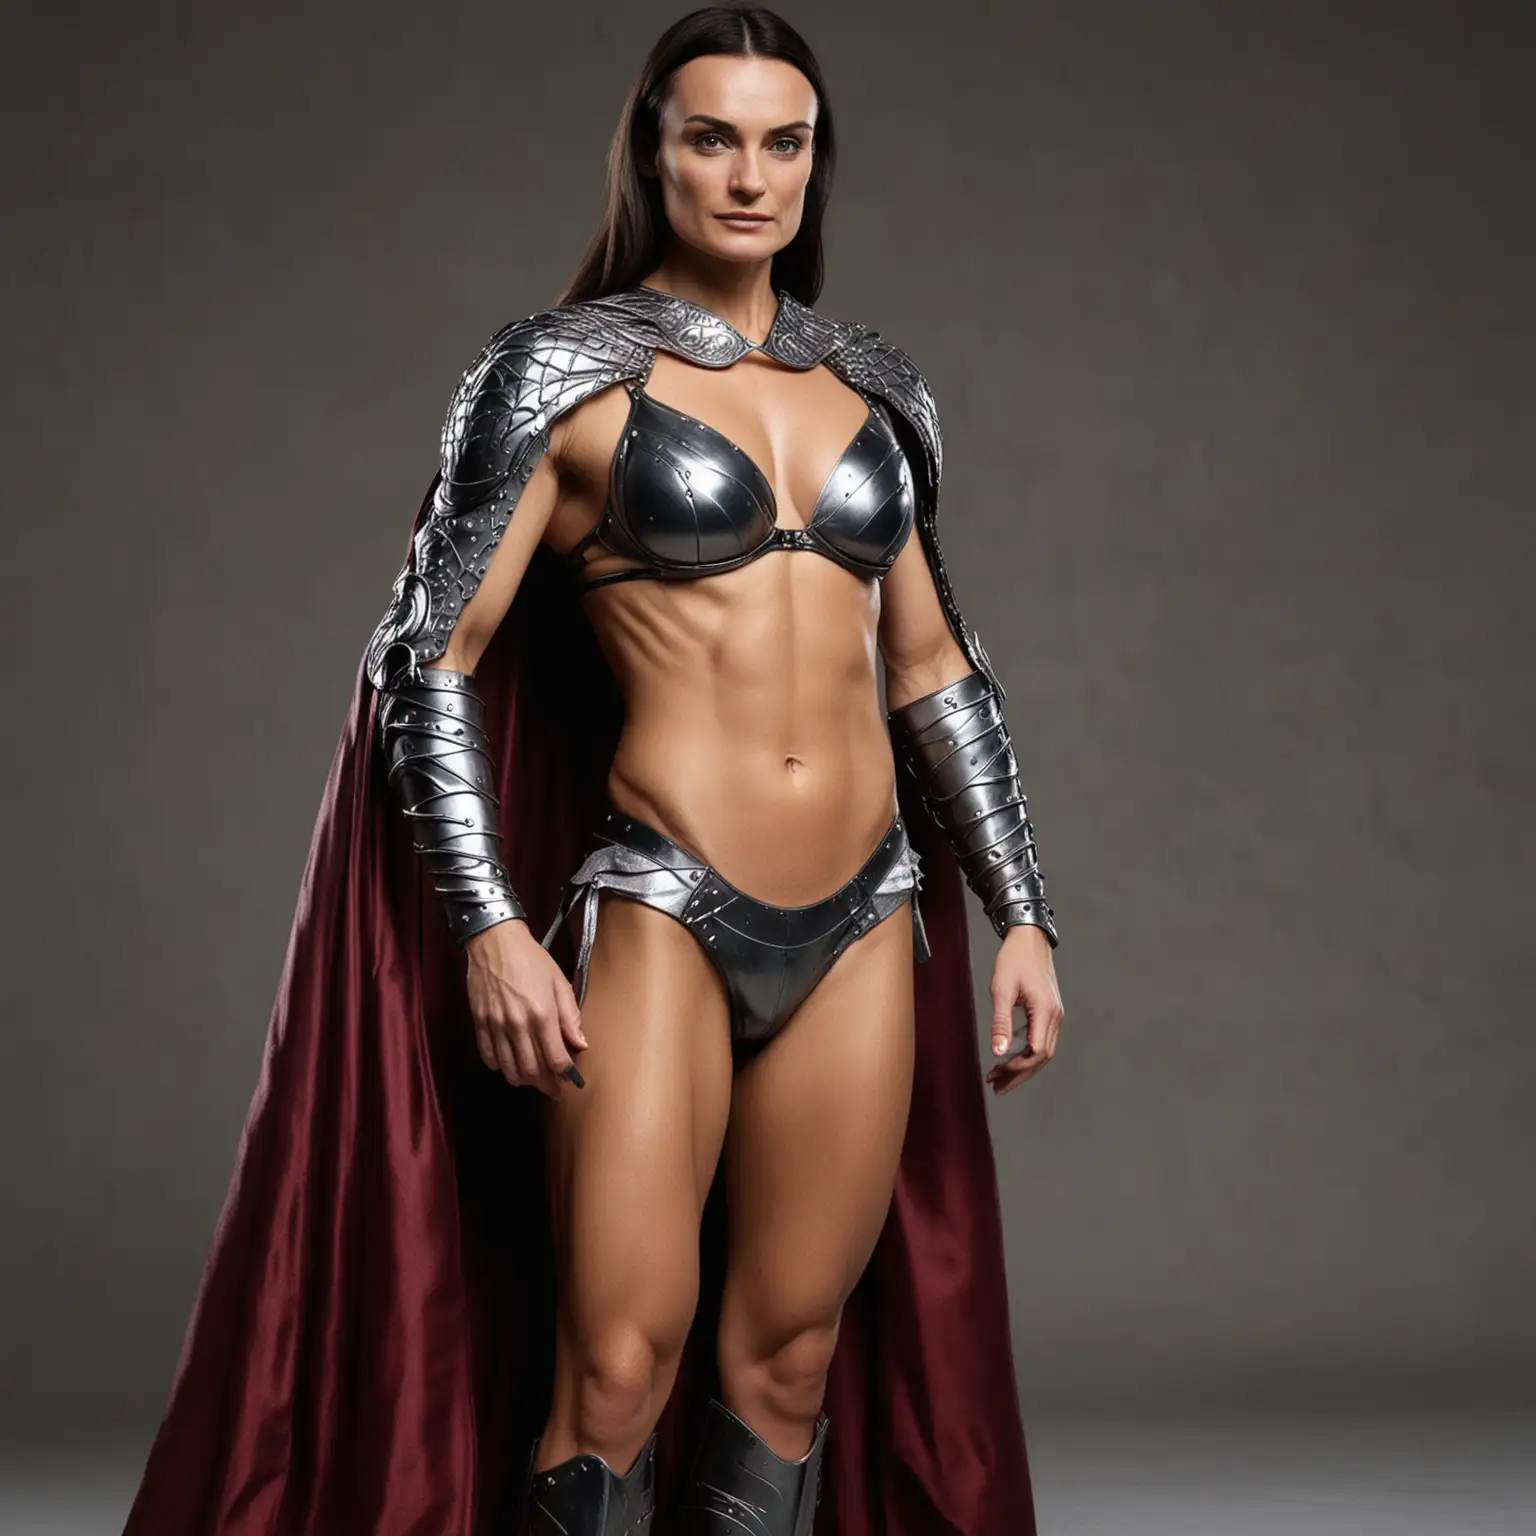 Yelena-Isinbayeva-in-Bikini-Armor-with-Cape-Full-Body-Portrait